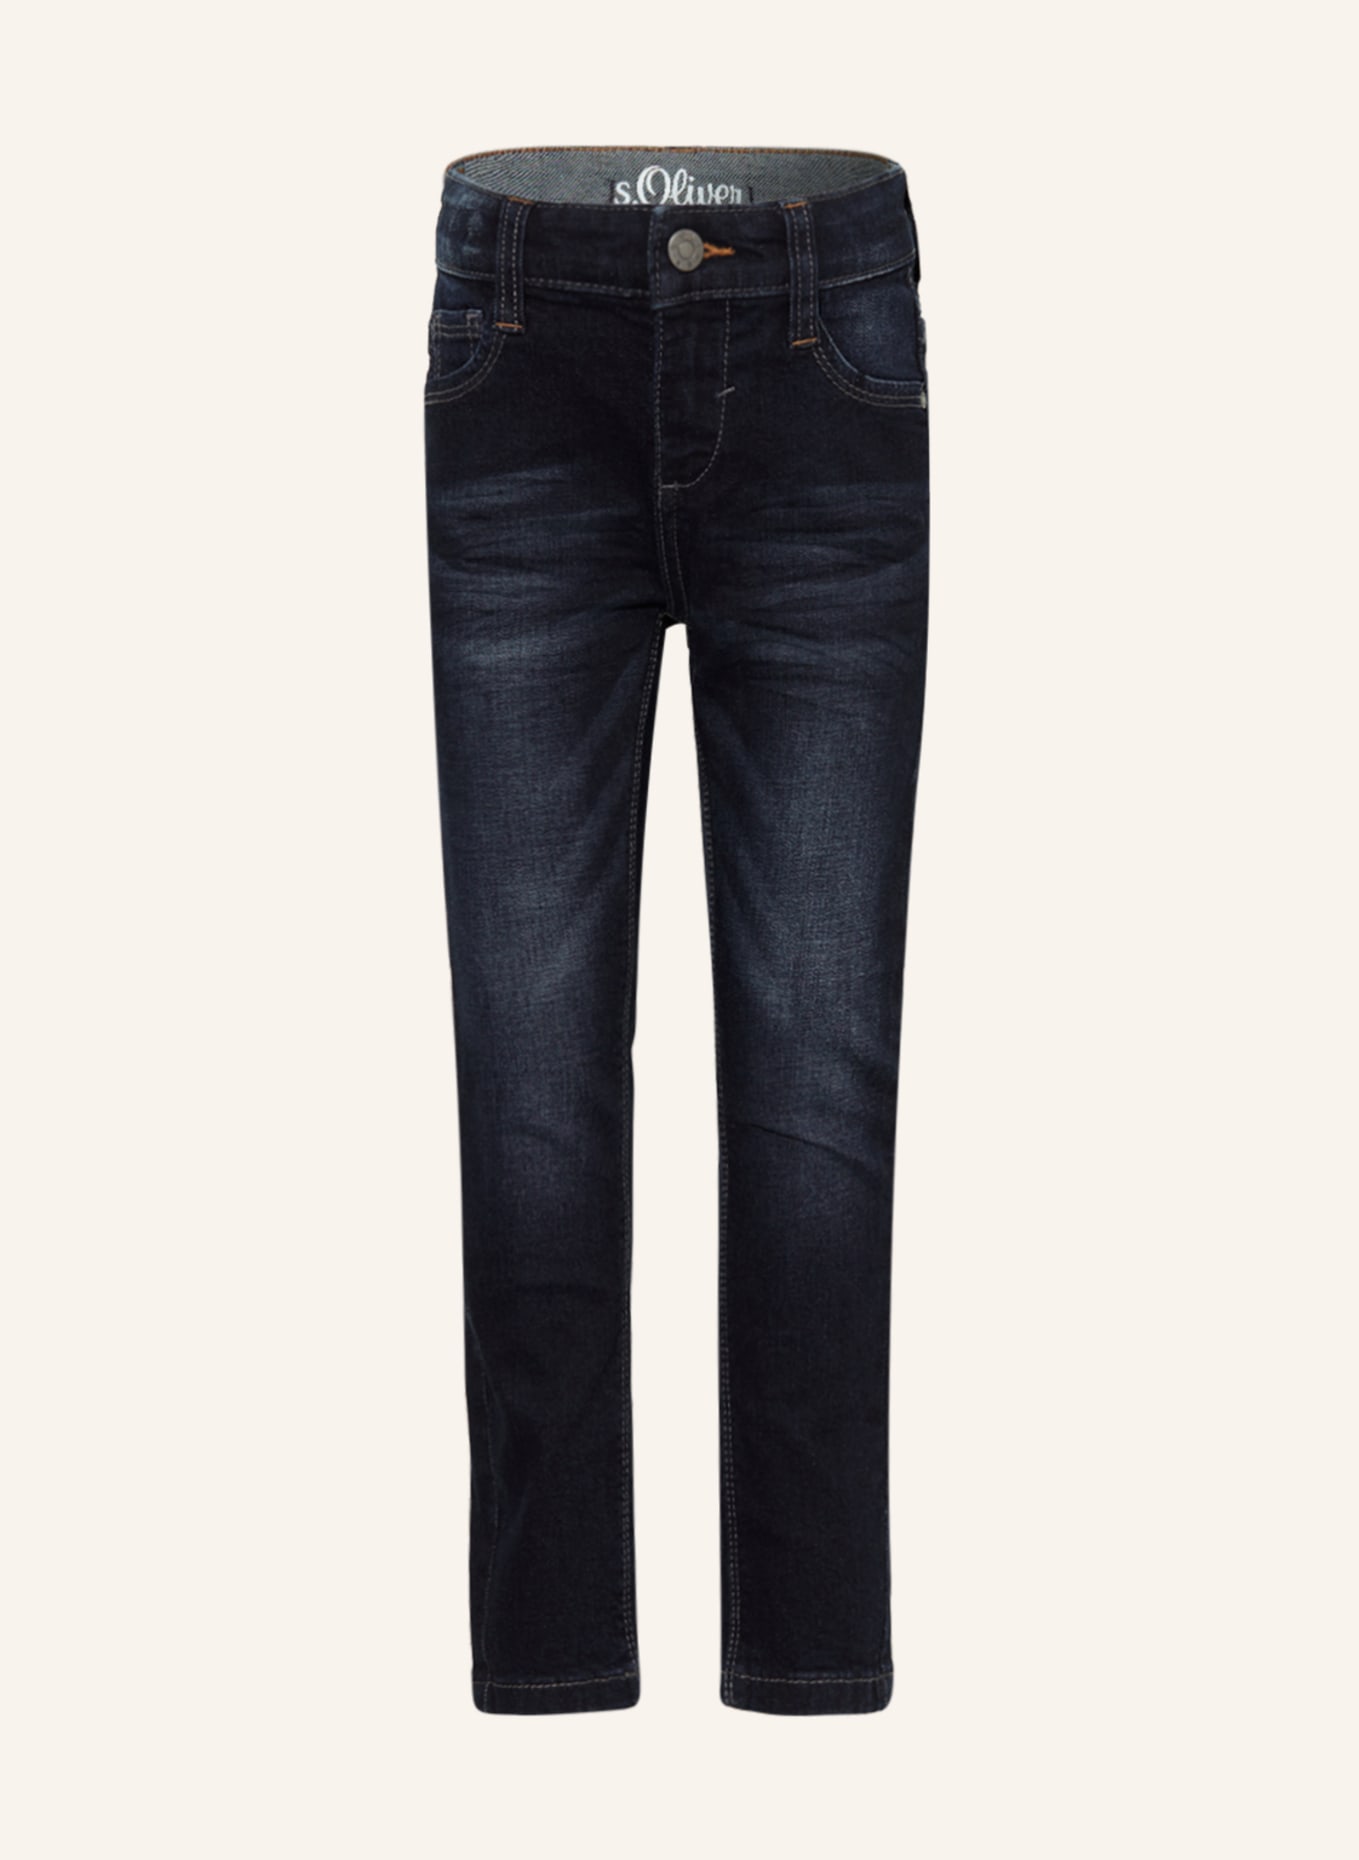 s.Oliver RED Jeans Regular Fit, Farbe: 58Z2 dark blue (Bild 1)